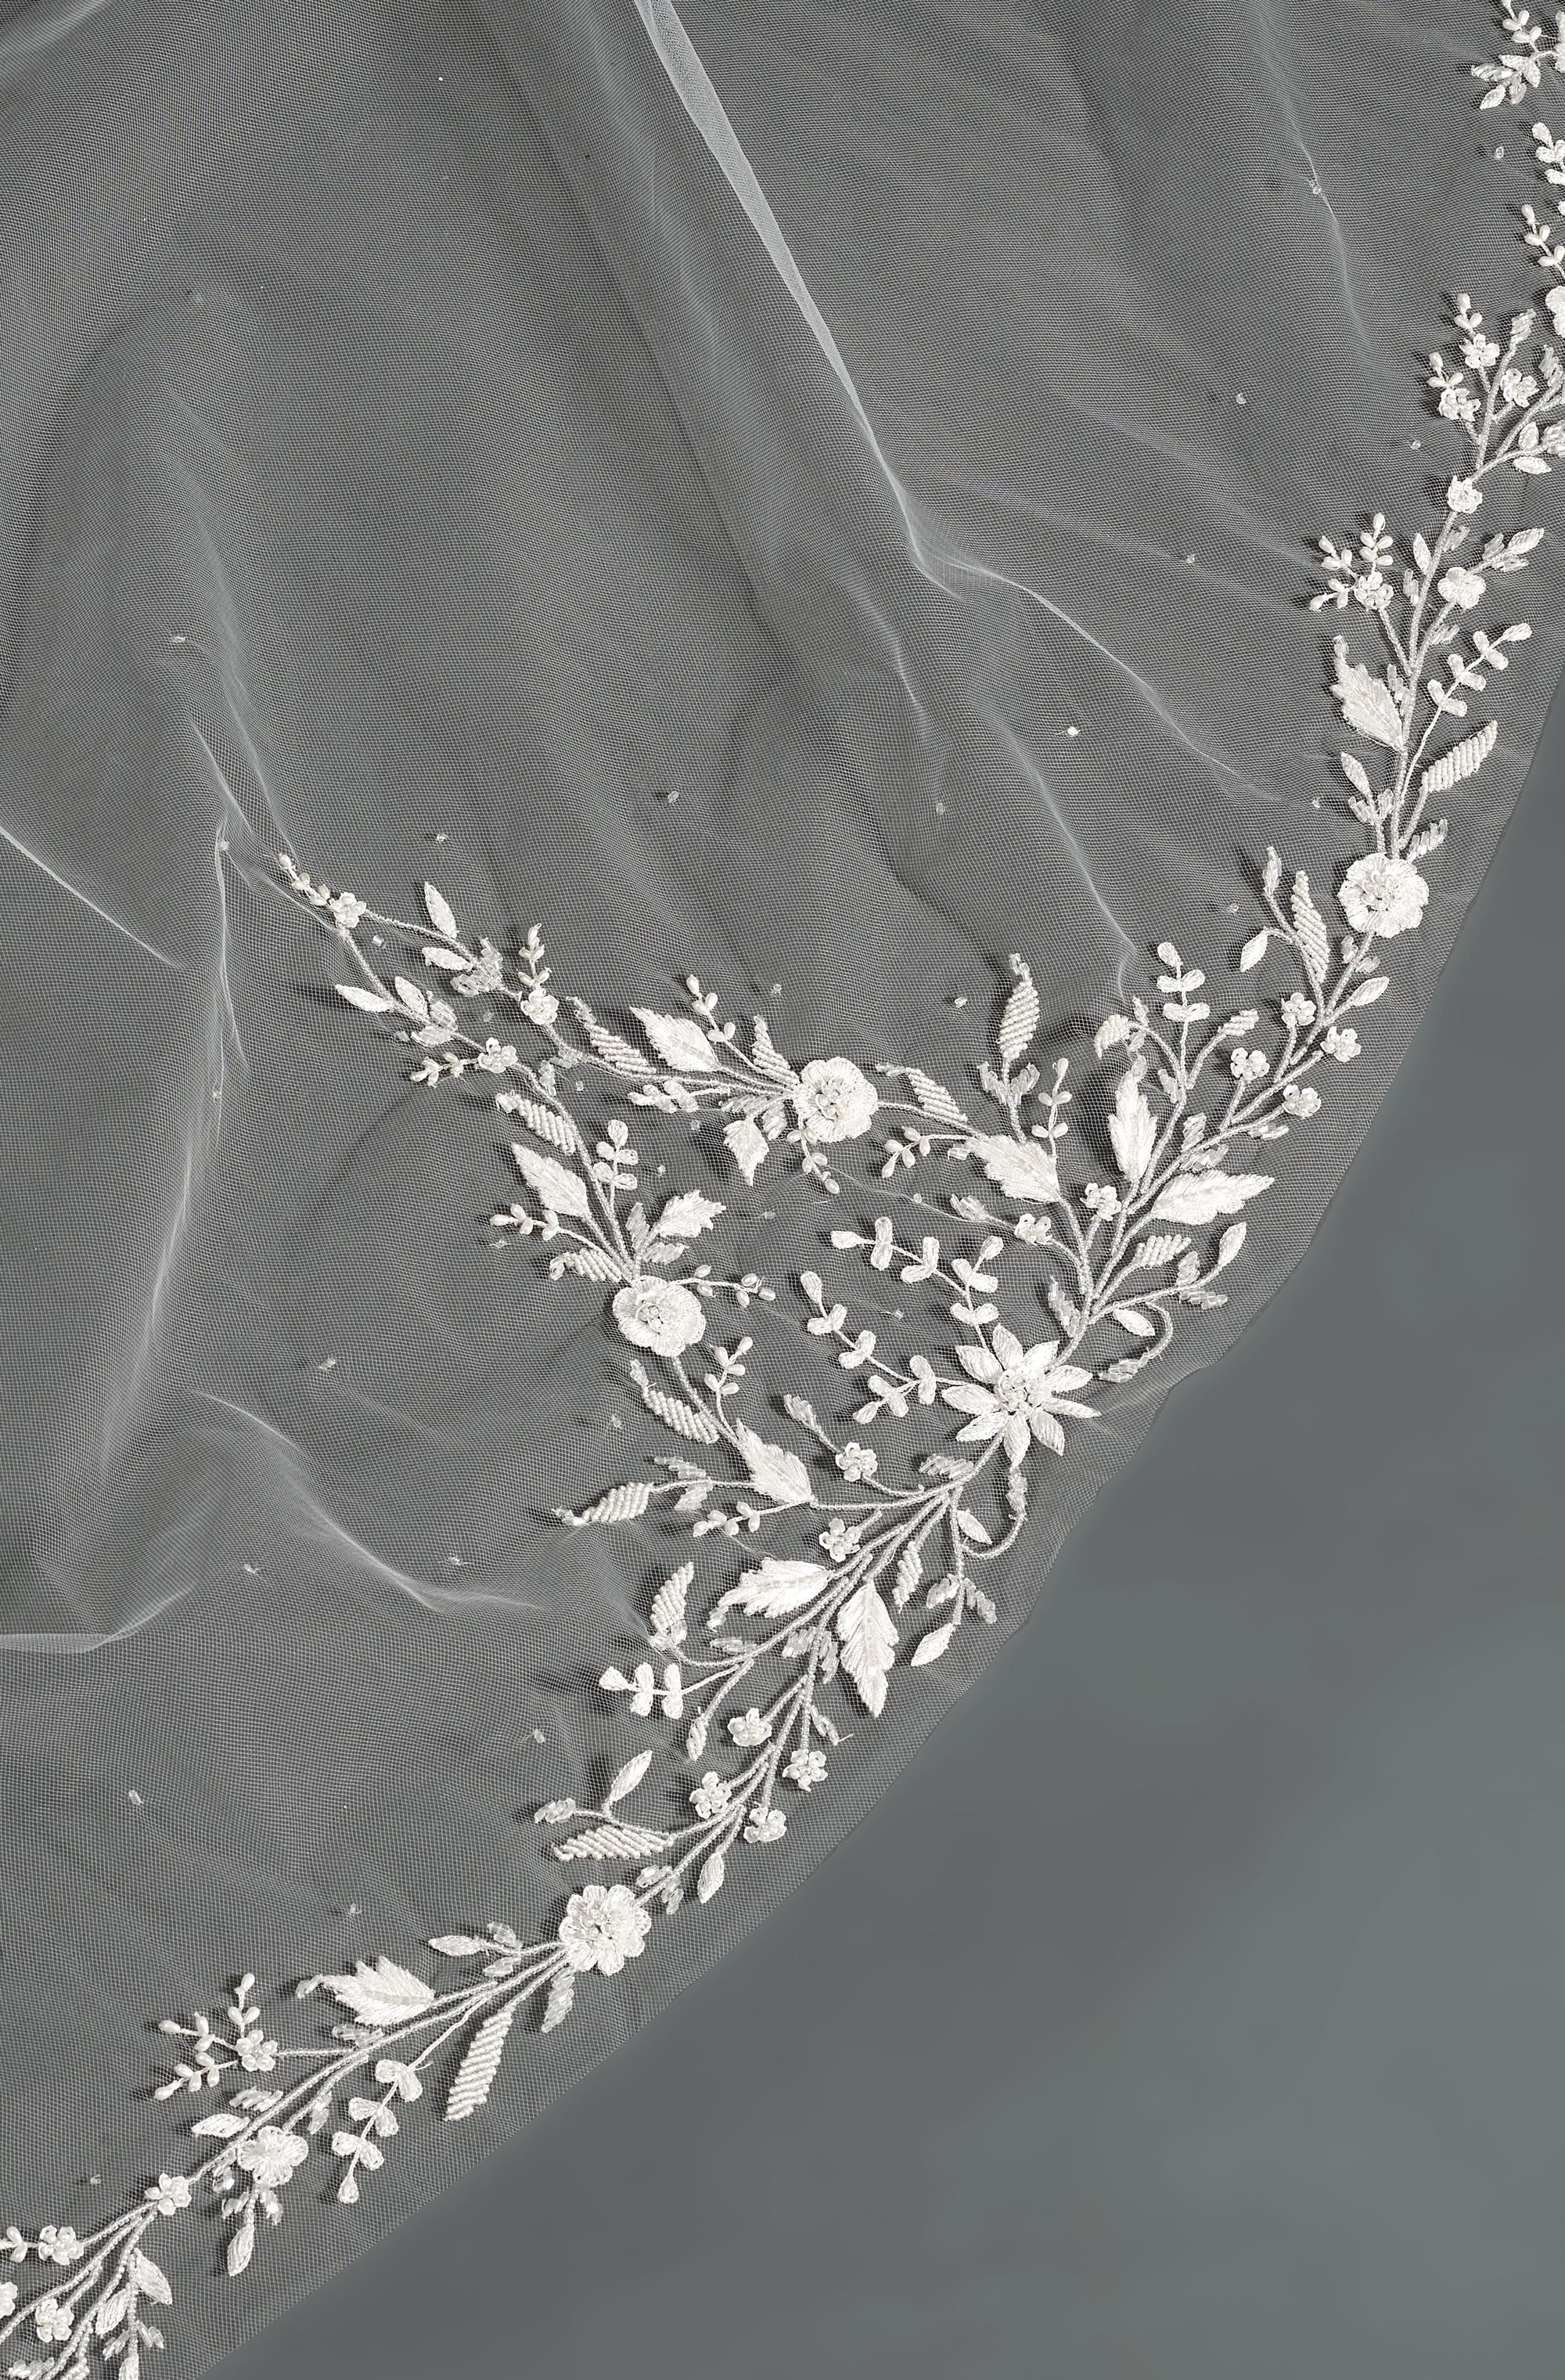 BV12023 (wholesale) beaded wedding dress Enaura bridal